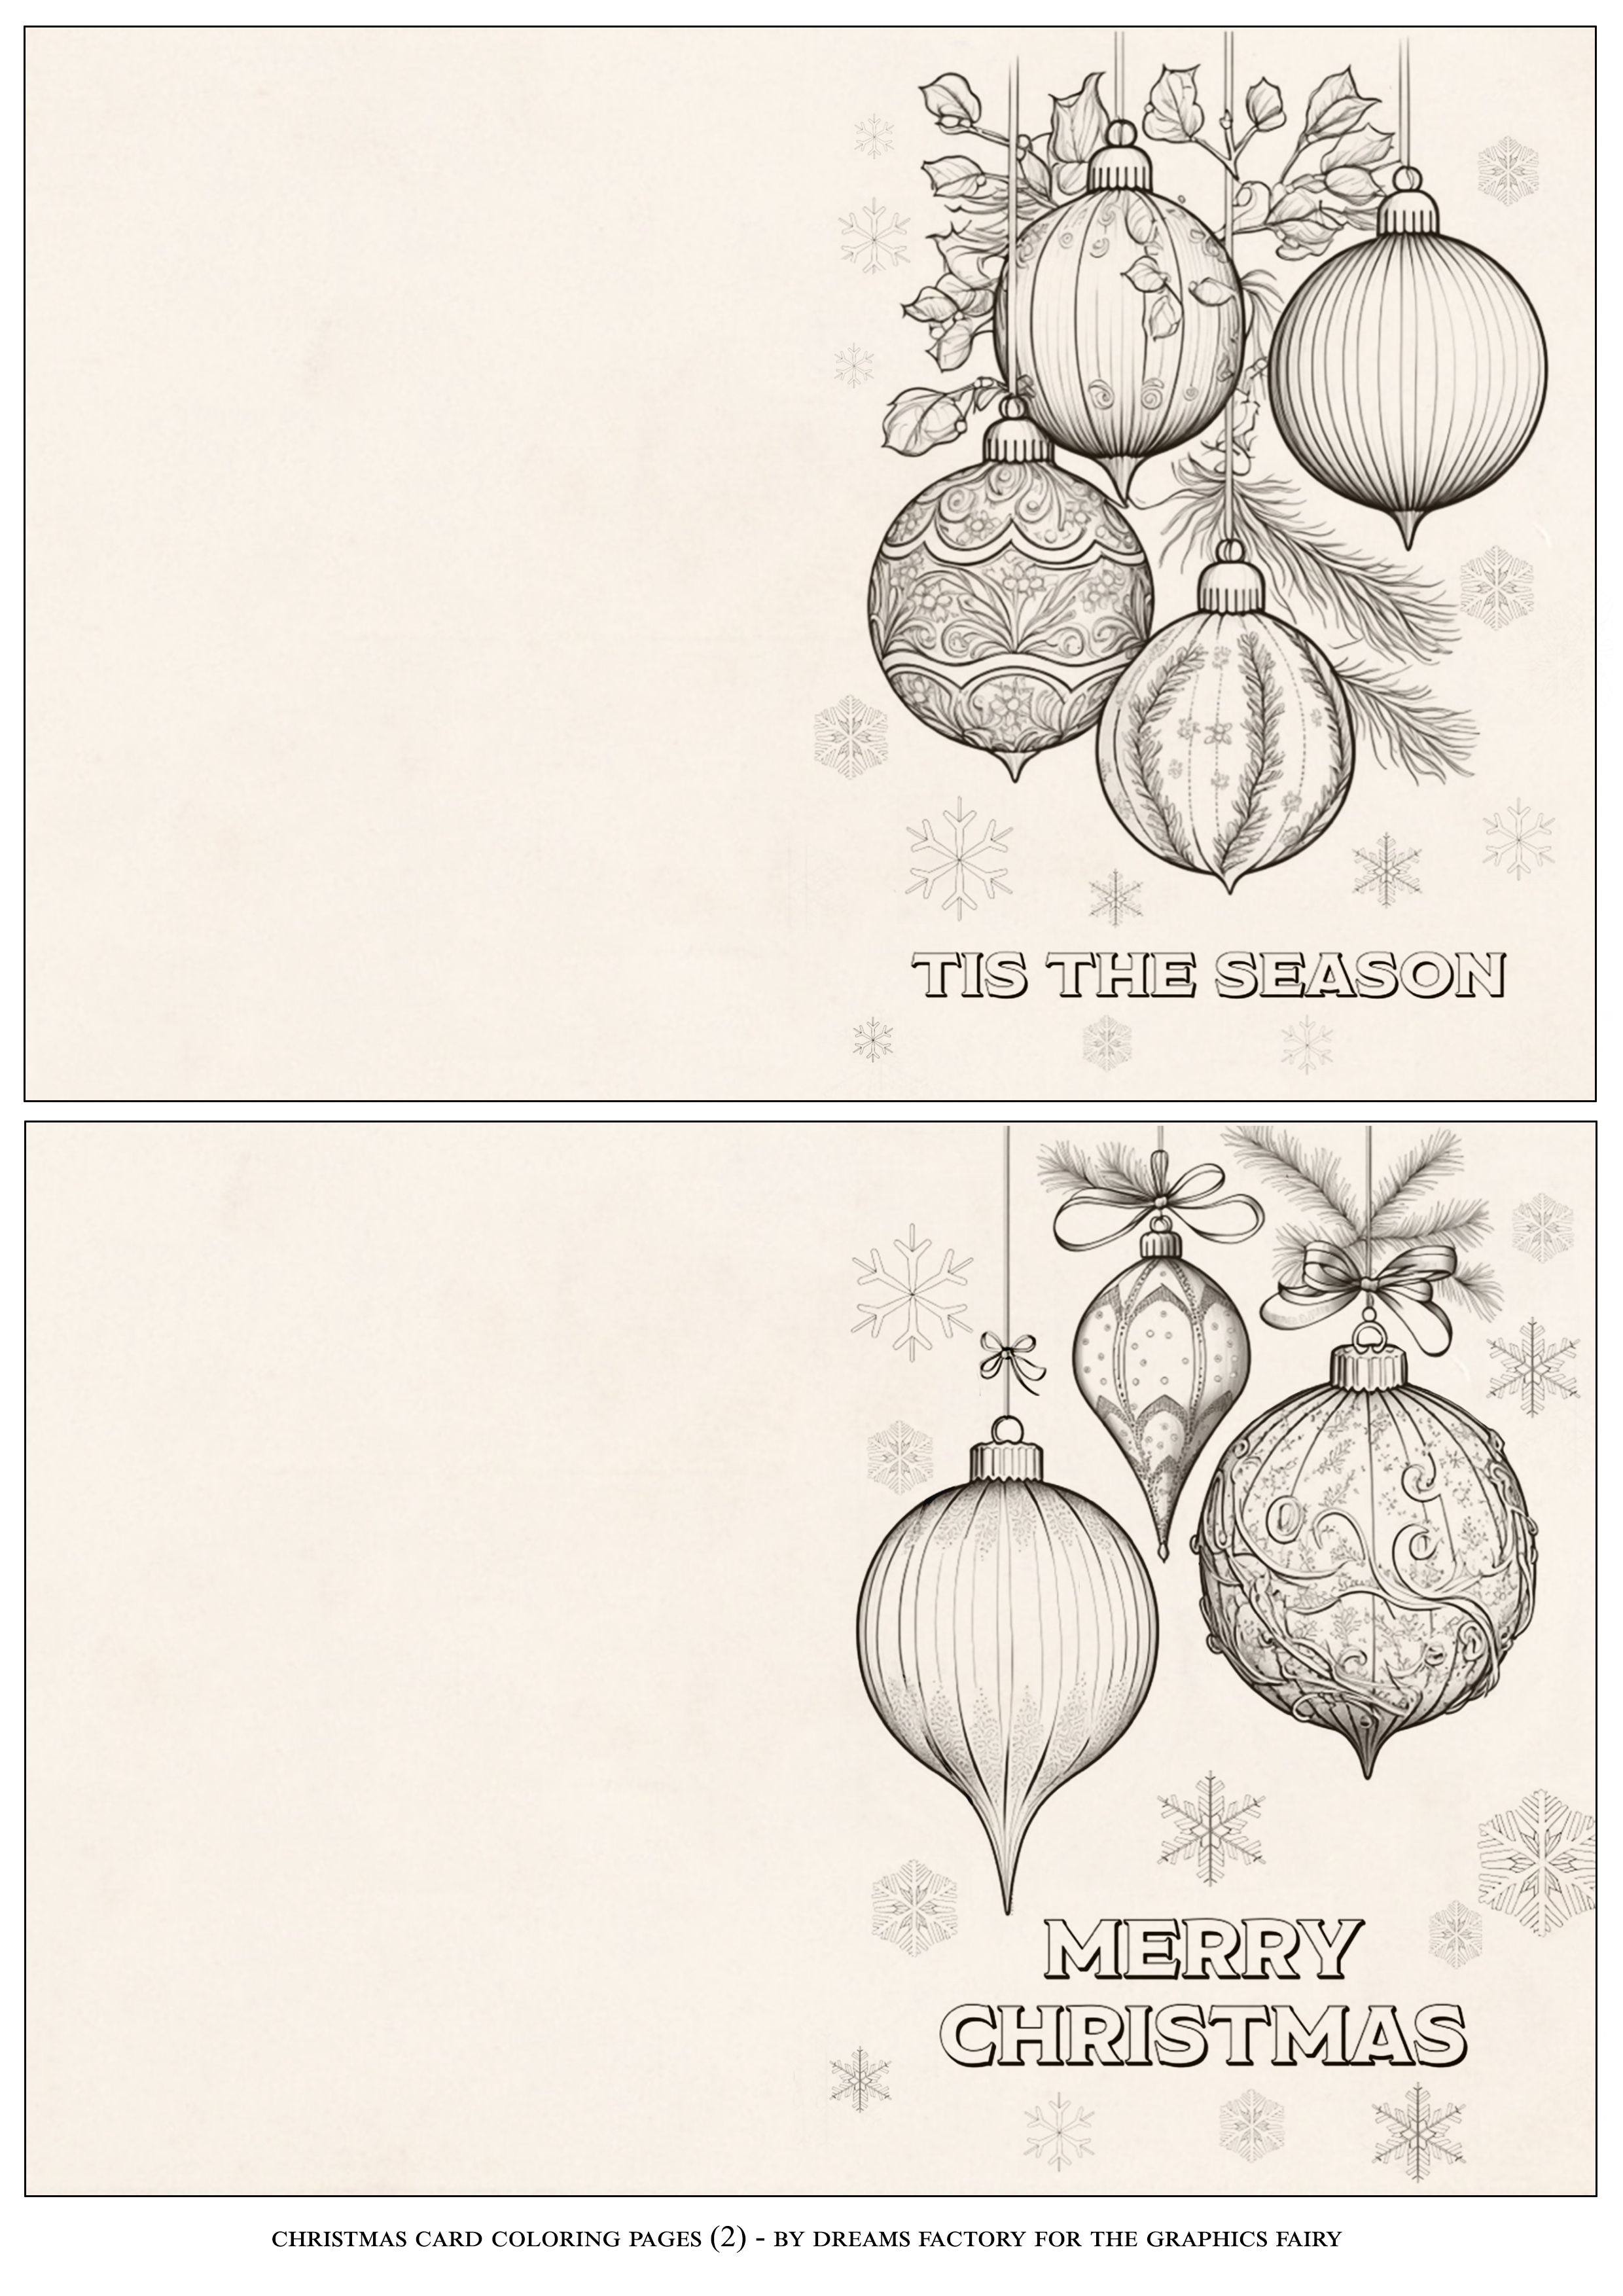 Christmas card coloring page free printable 2